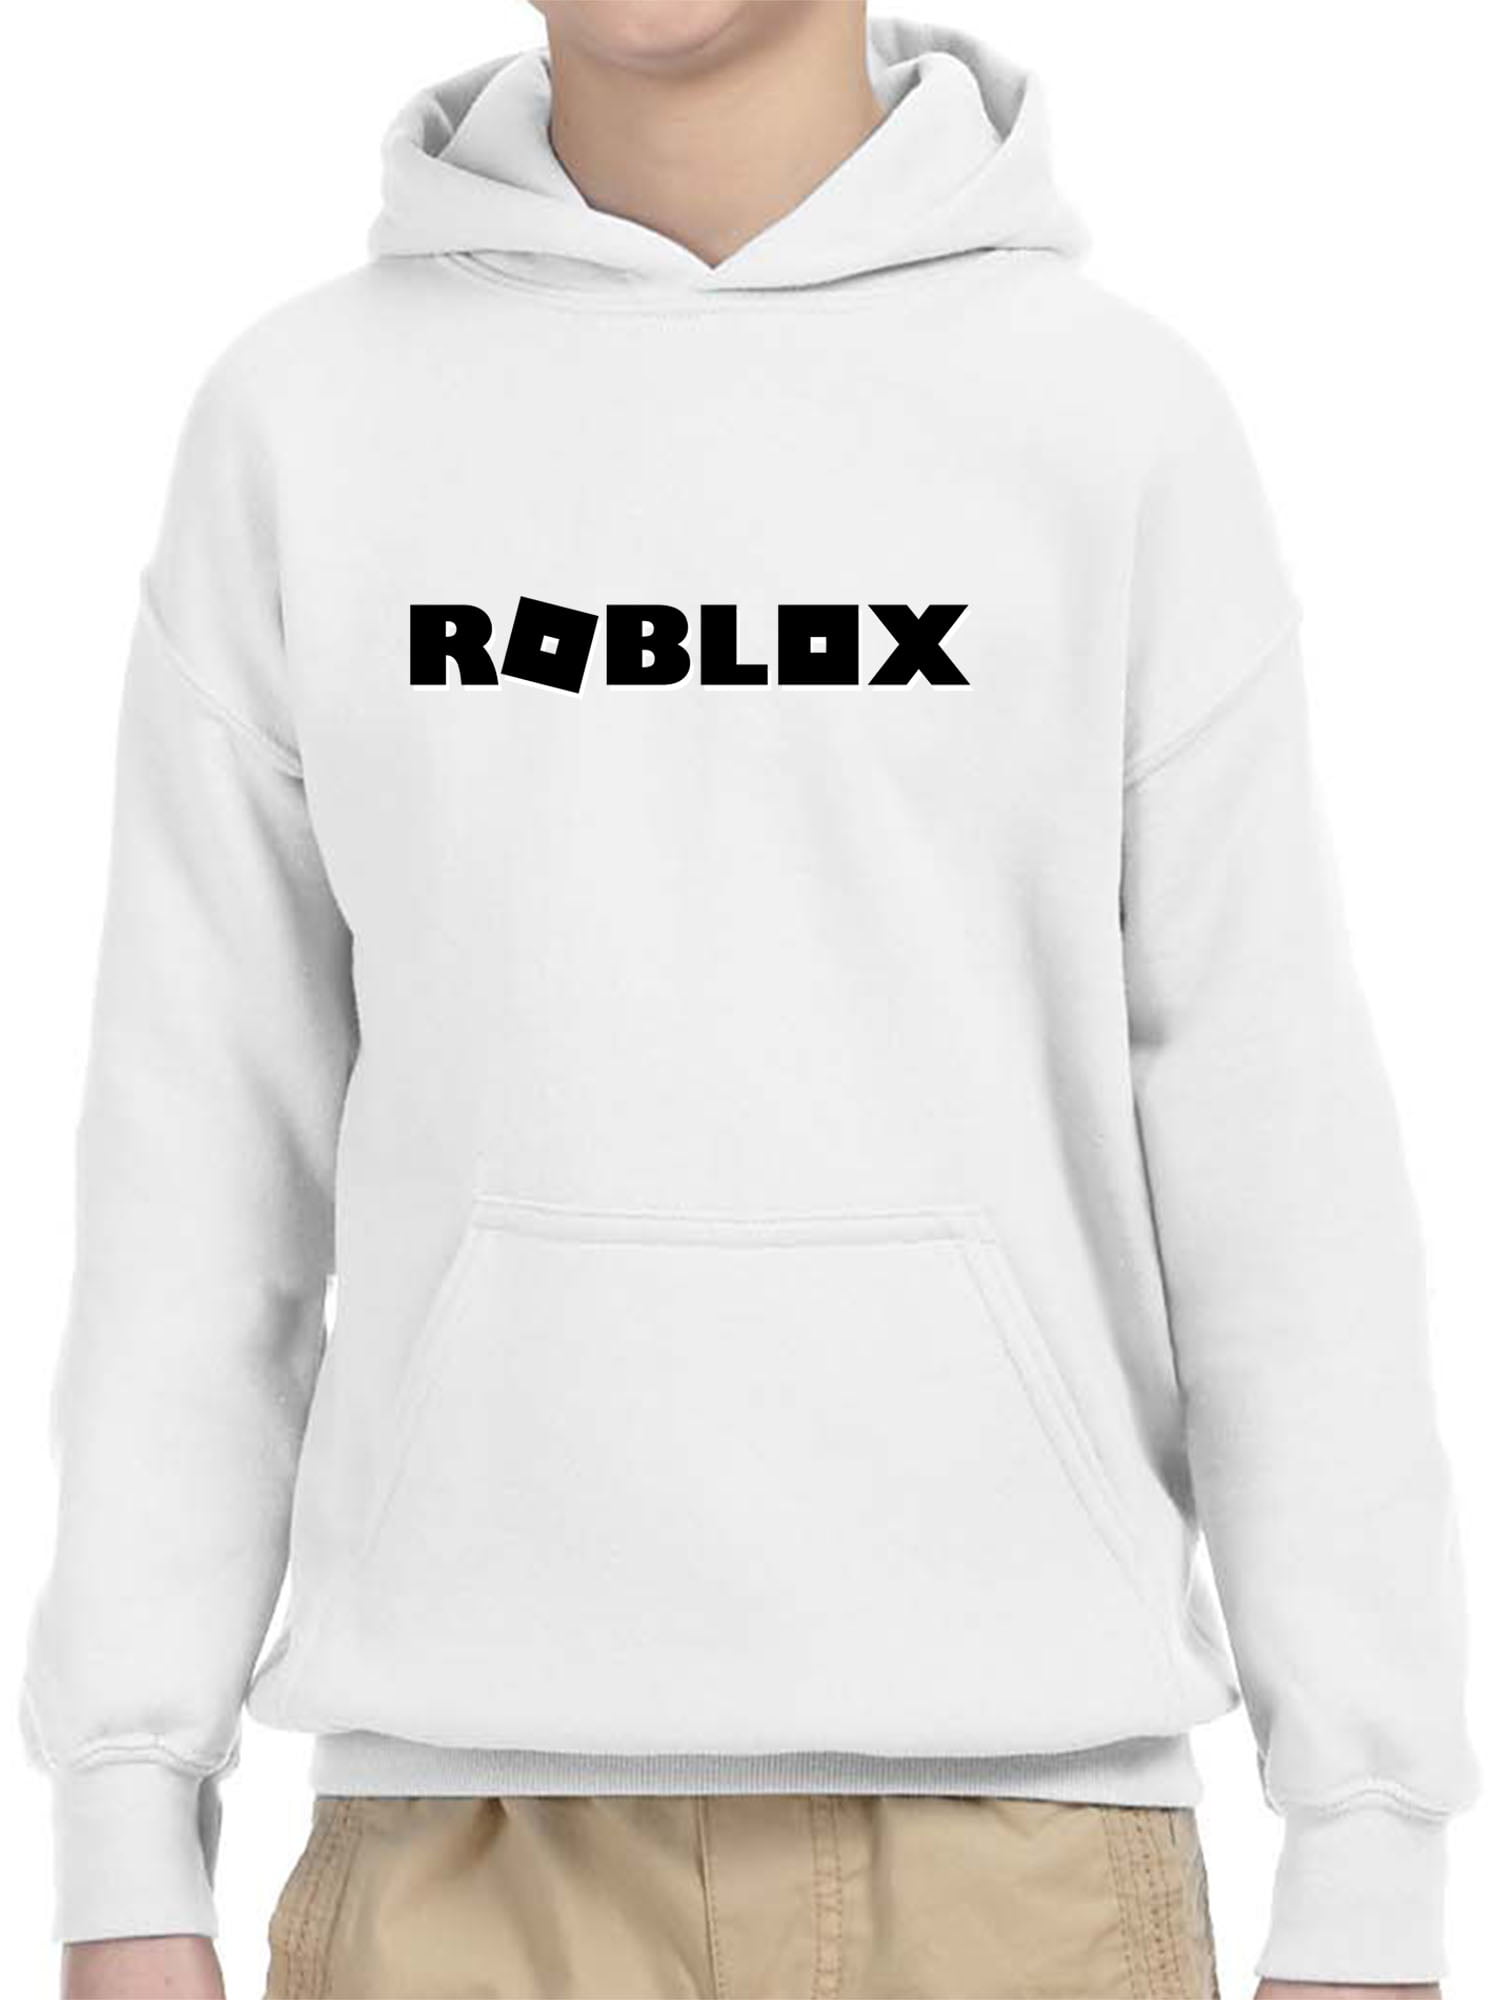 New Way New Way 1168 Youth Hoodie Roblox Block Logo Game Accent Unisex Pullover Sweatshirt Medium White Walmart Com Walmart Com - roblox white hoodie strings